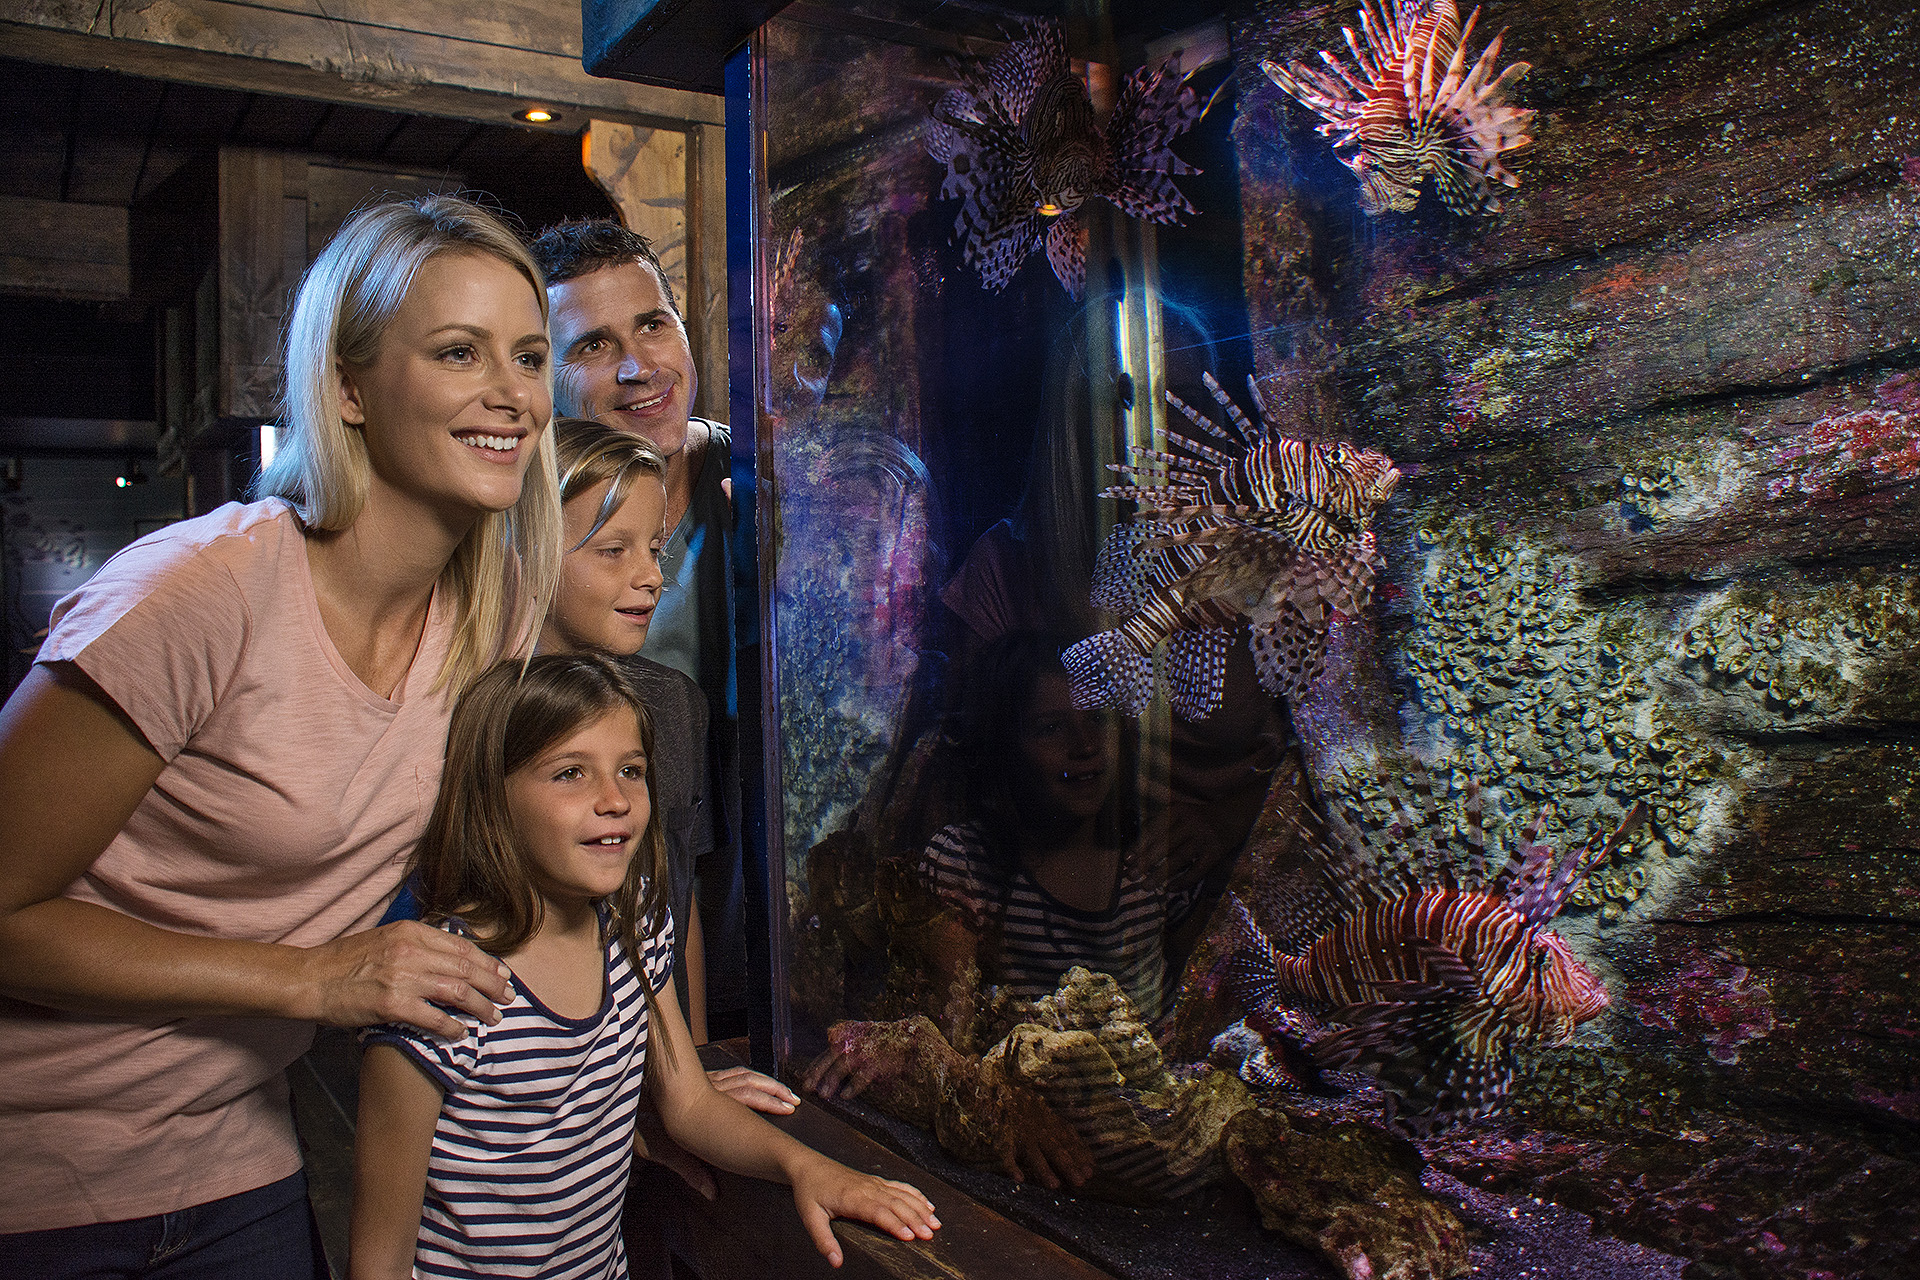 Family looking into aquarium tank